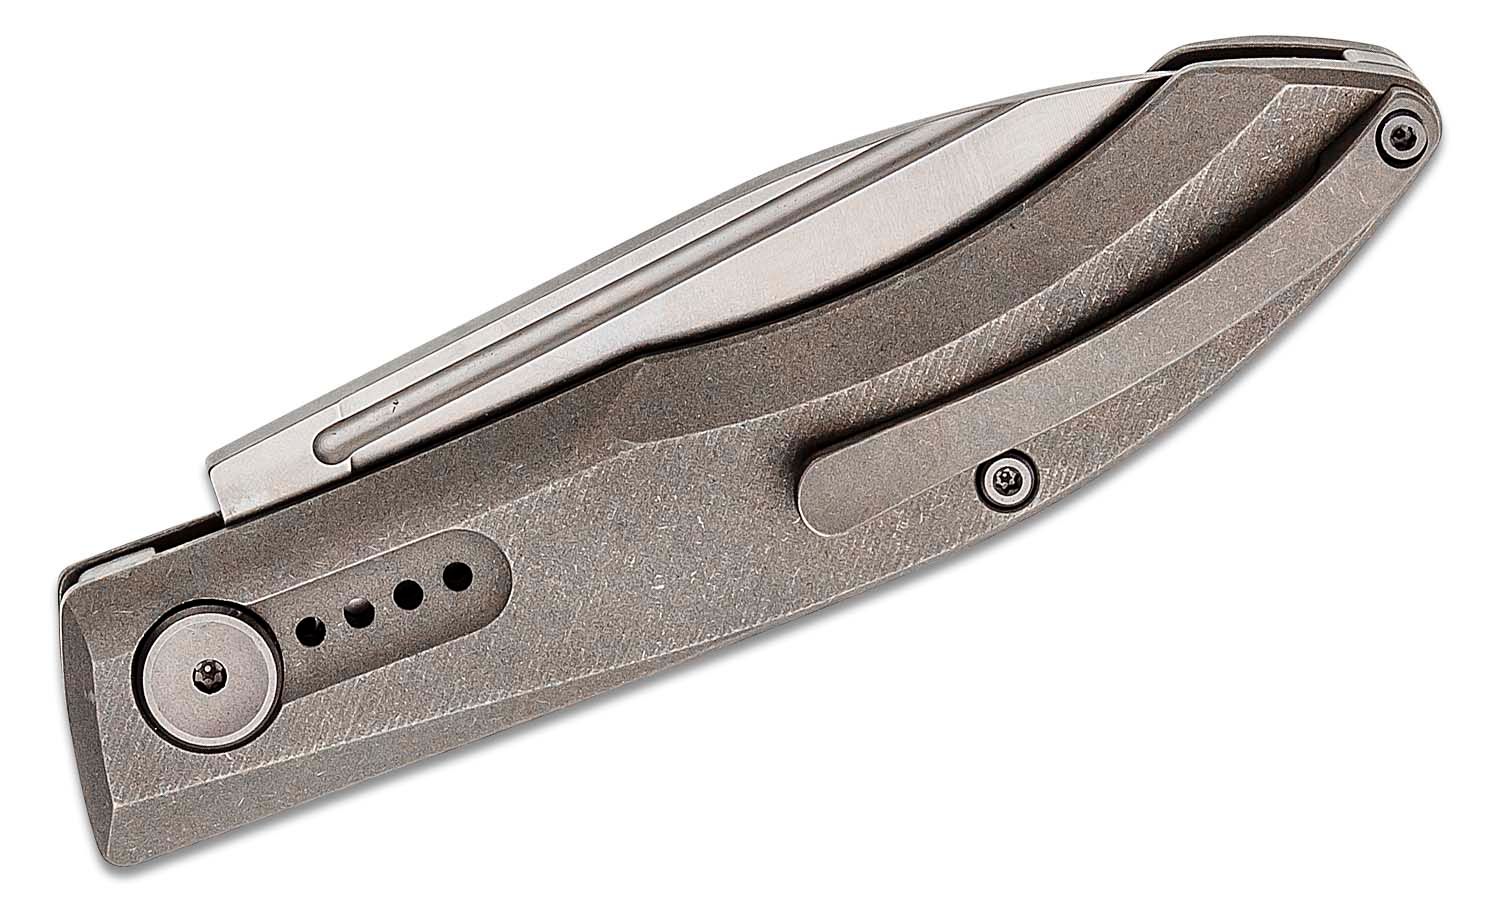  Real Steel Stella Slide Lock Folding Knife - 2.95 VG